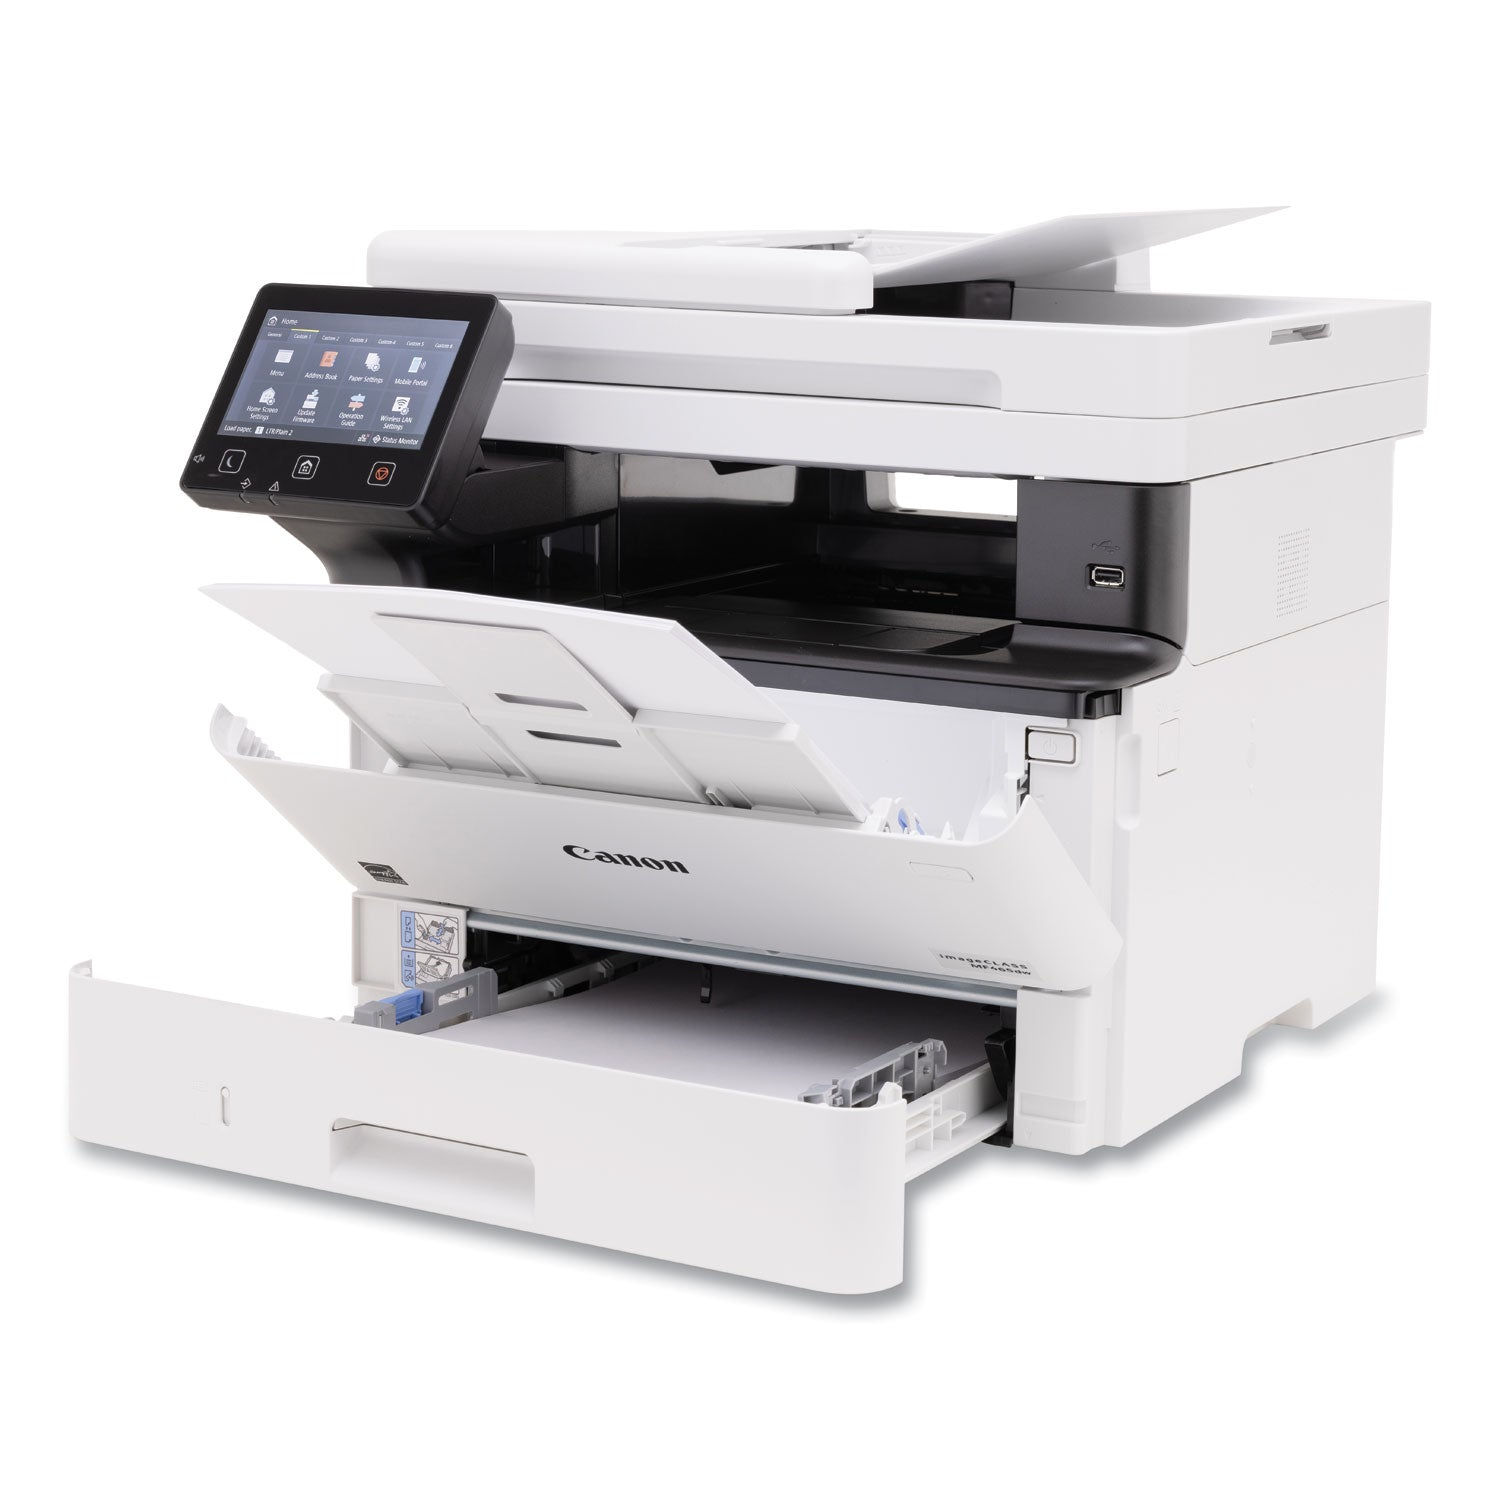 imageclass-mf465dw-wireless-multifunction-laser-printer-copy-fax-print-scan_cnm5951c005 - 2